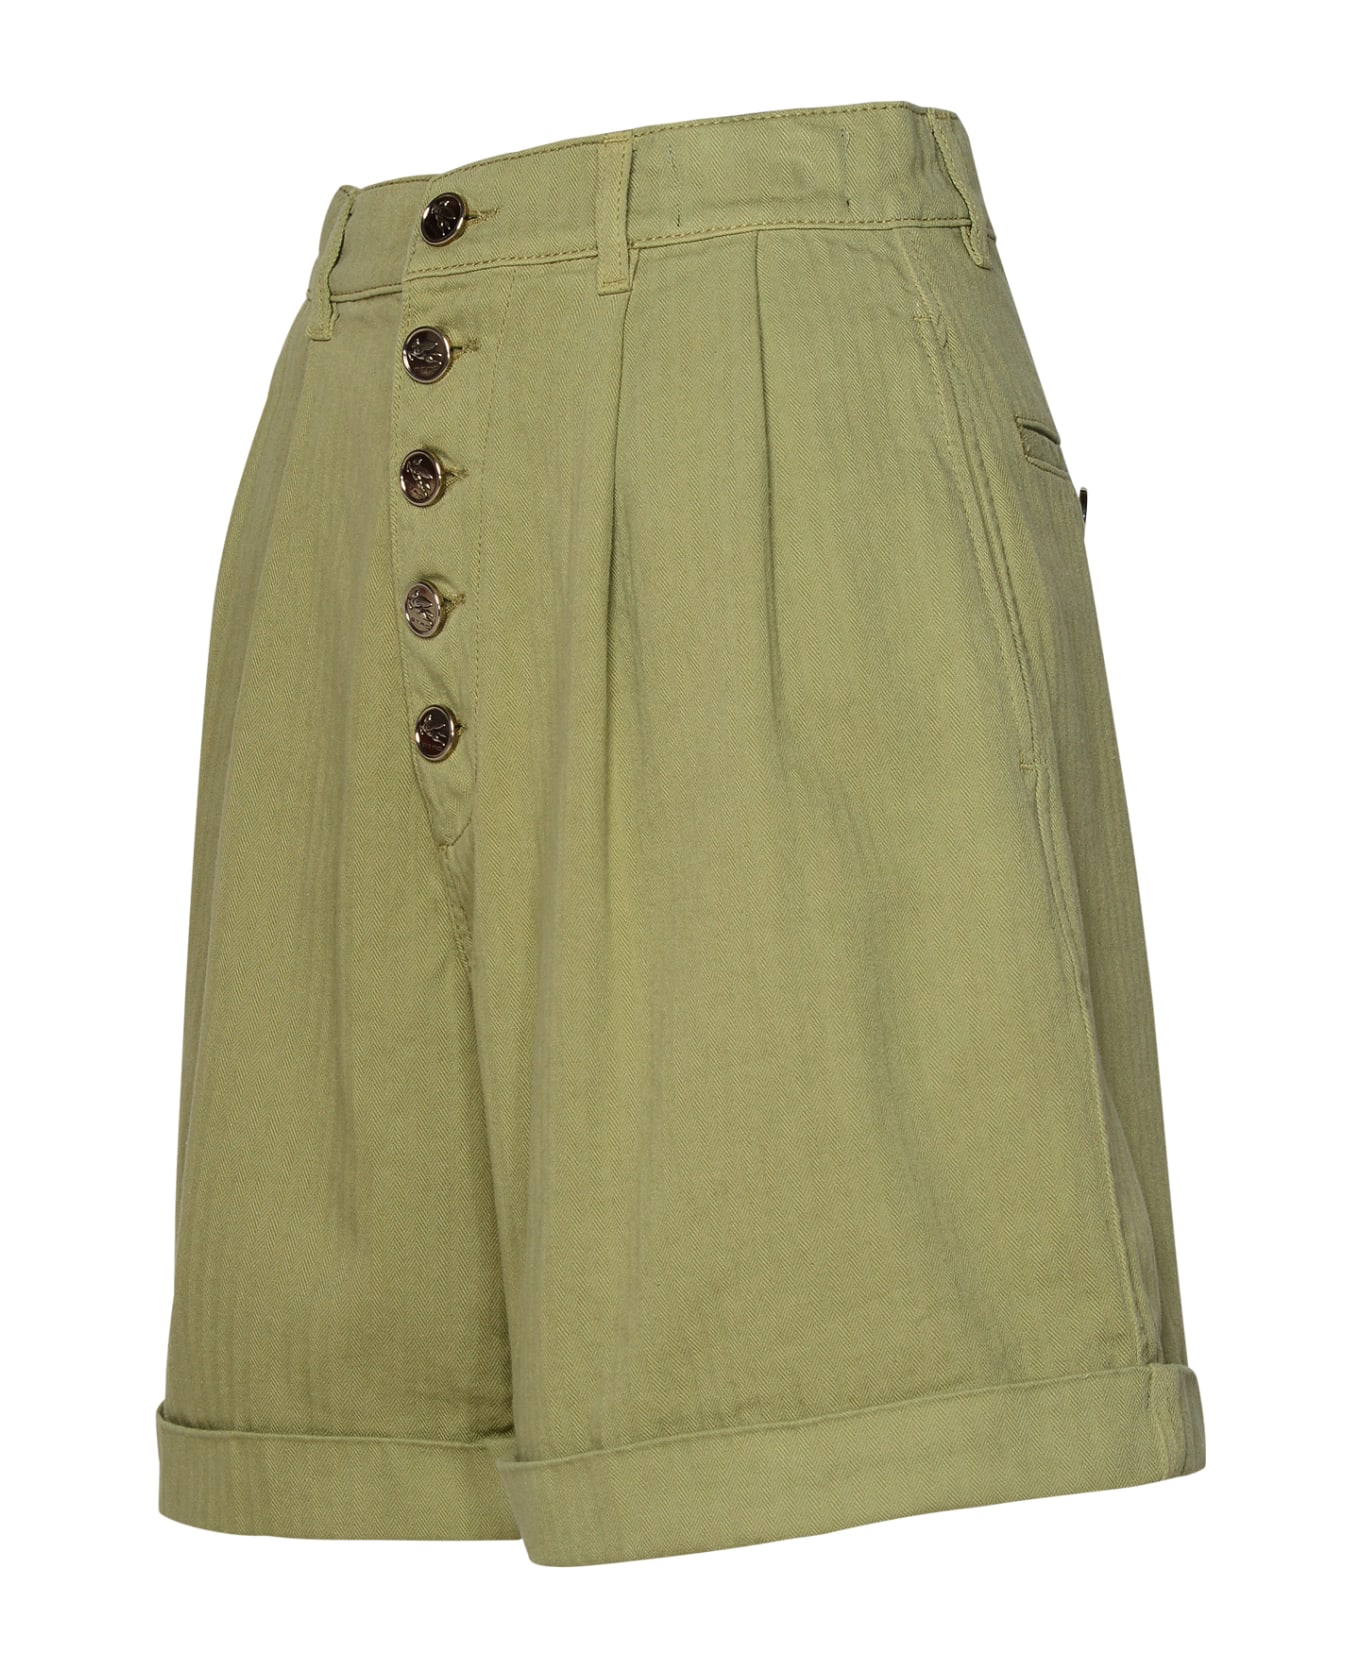 Etro Green Cotton Shorts - Green